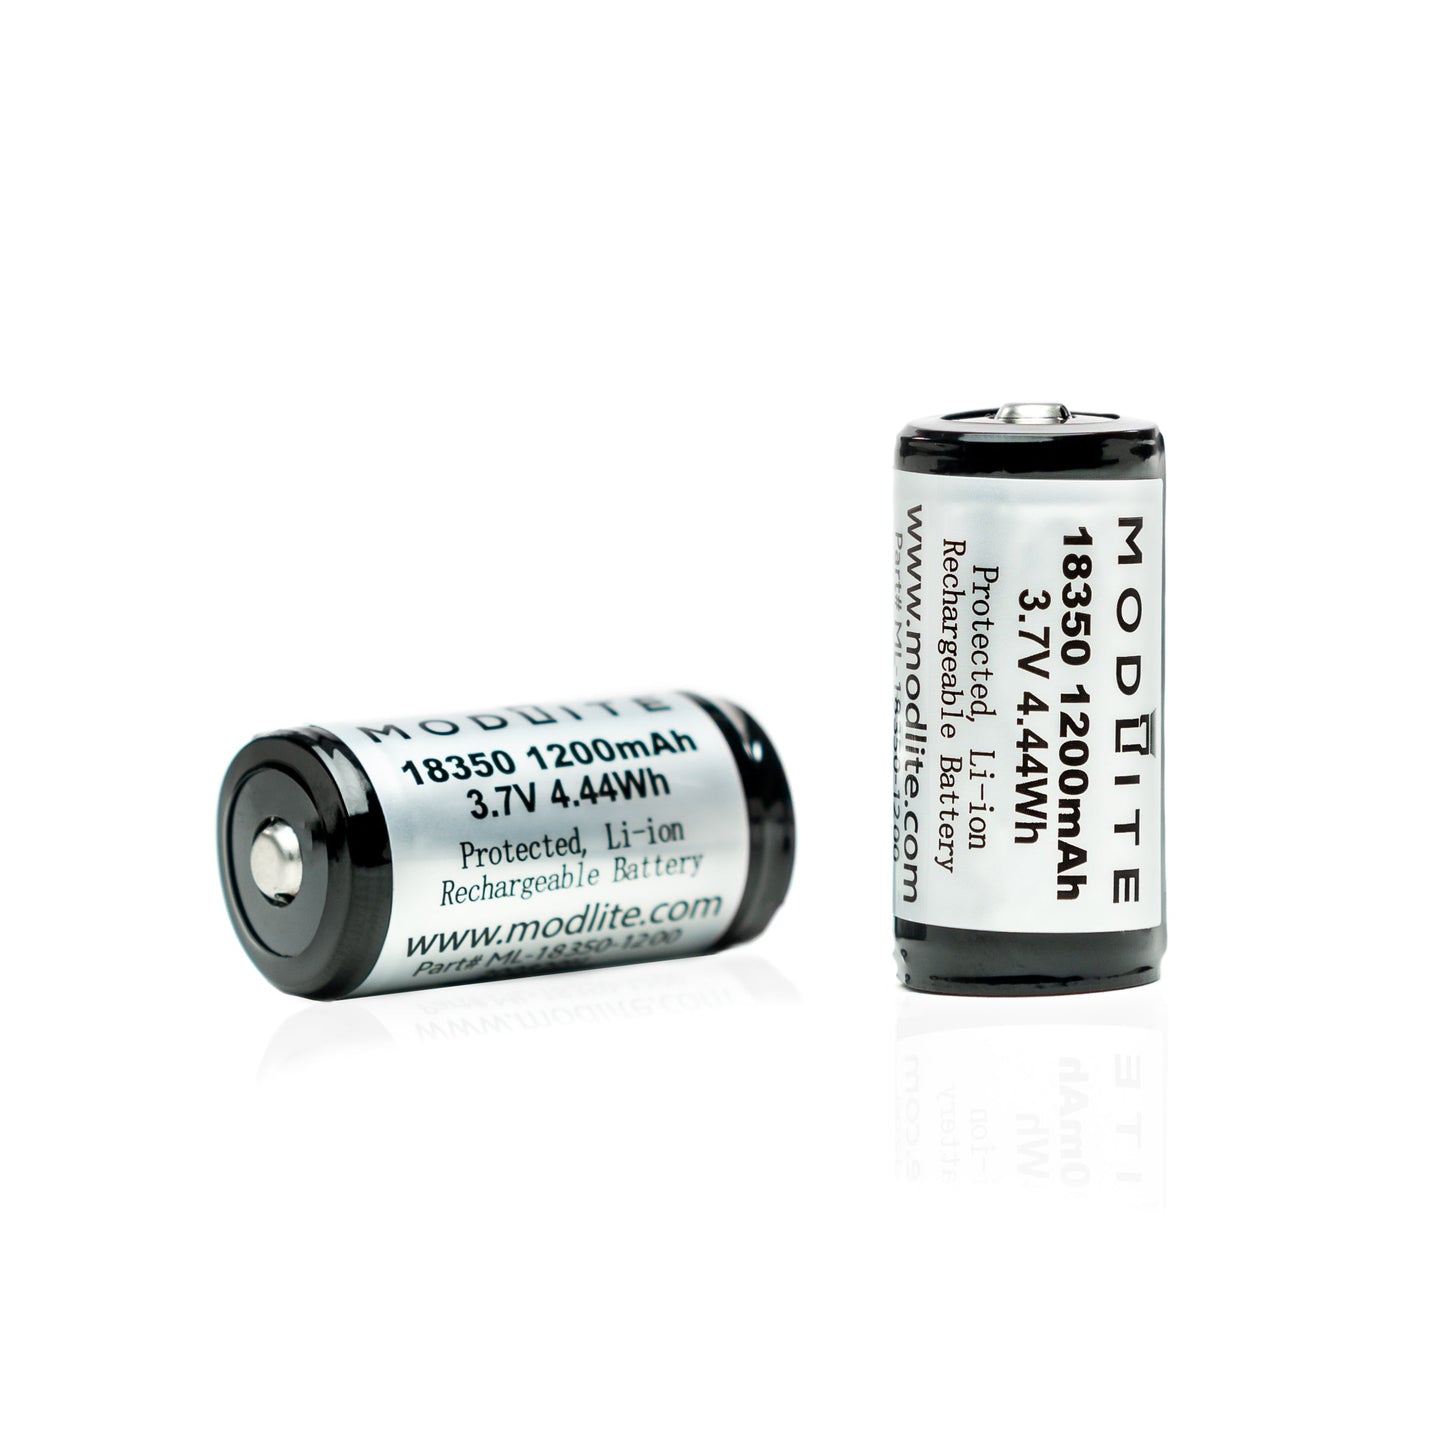 TOTALCOOL Batterie externe TCP150